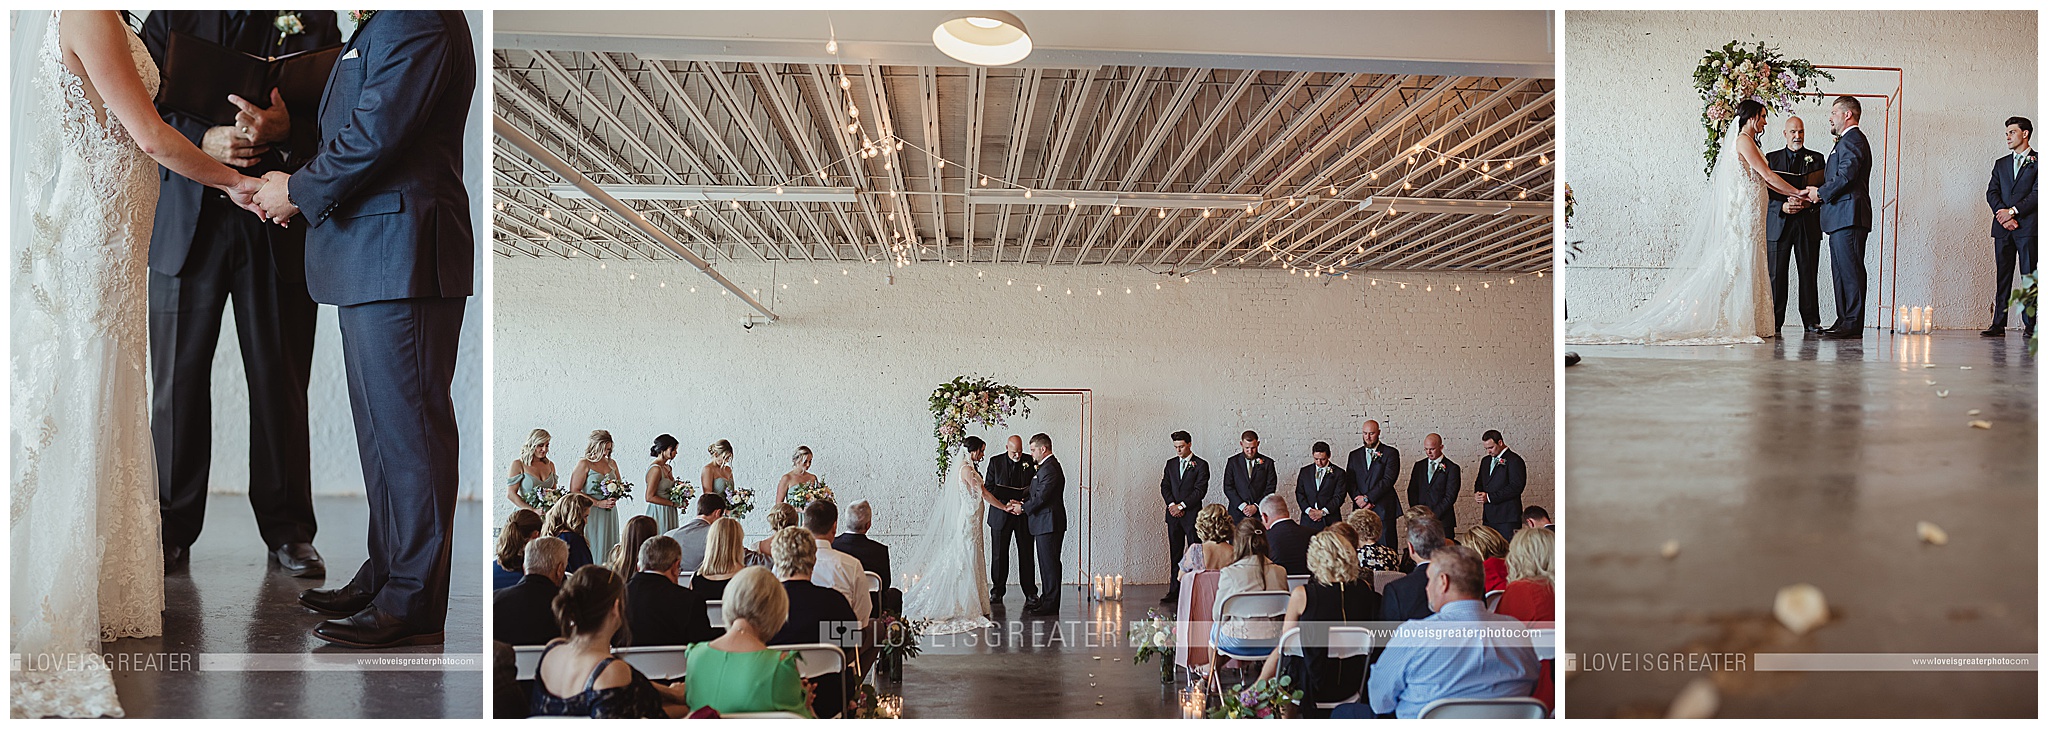 ohio-warehouse-industrial-wedding-photographer_0019